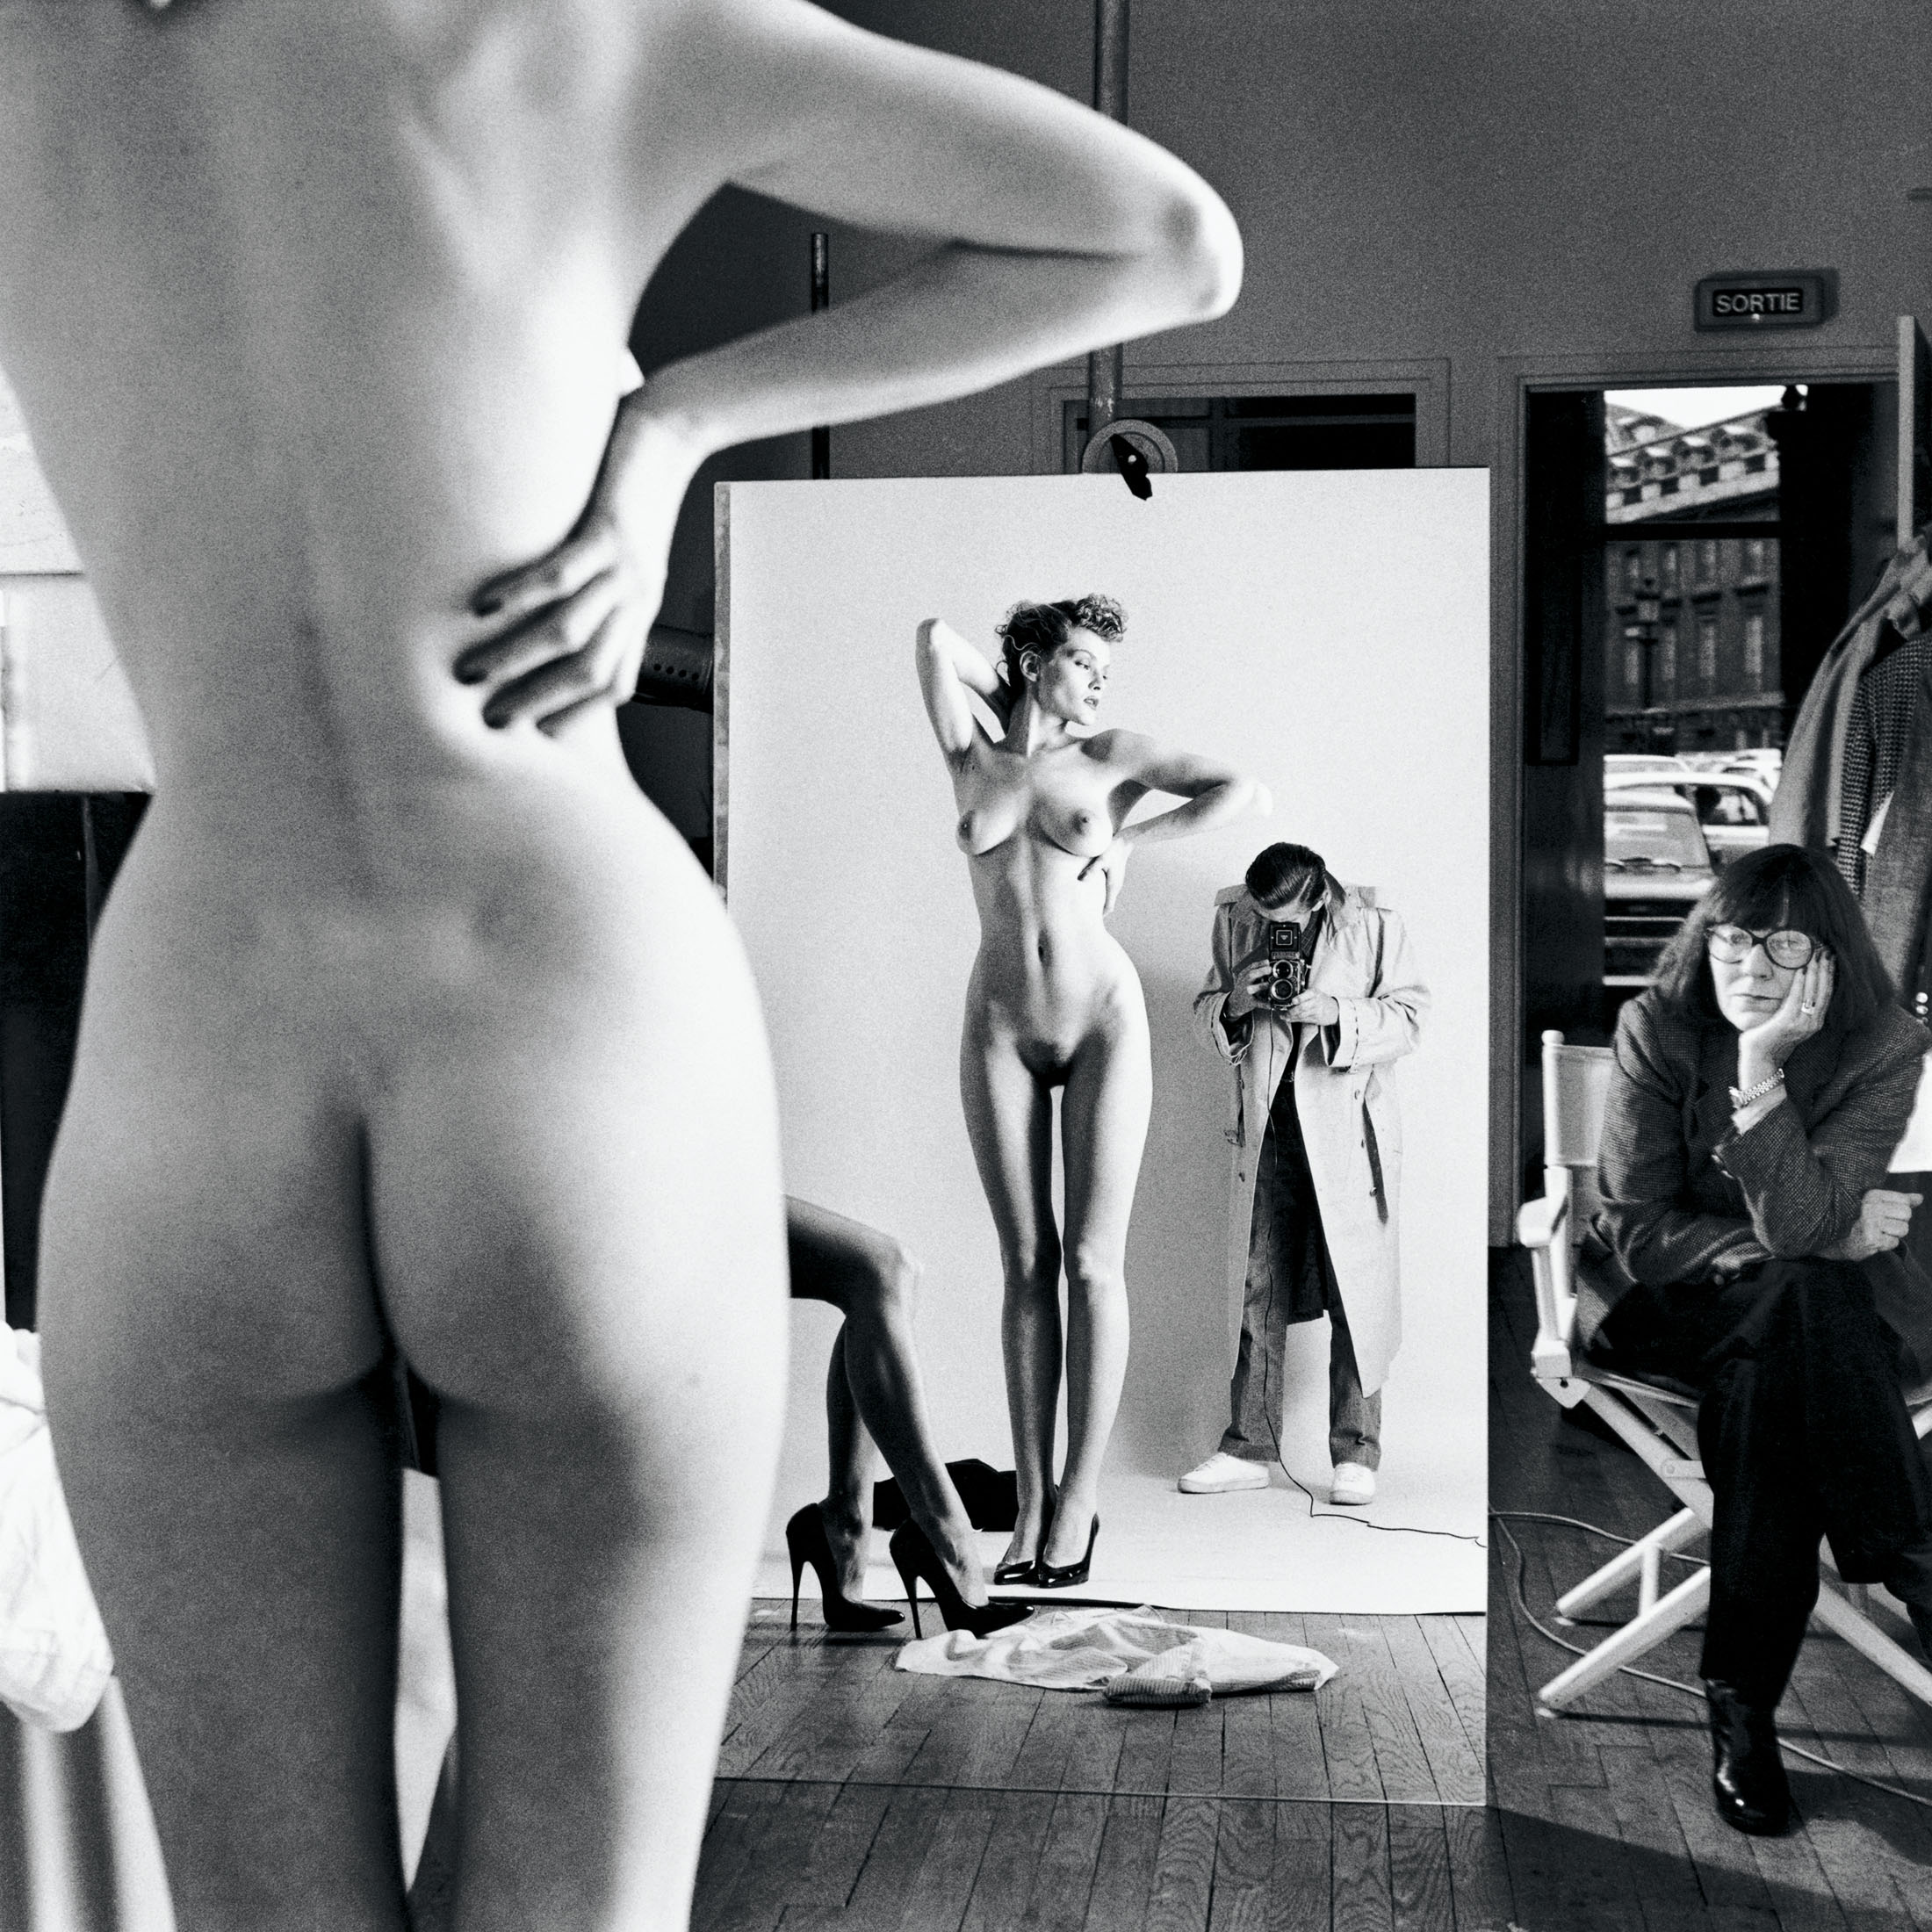 Helmut Newton Fotografie: la mostra White Women, Sleepless Nights e Big Nudes per la prima volta a Venezia